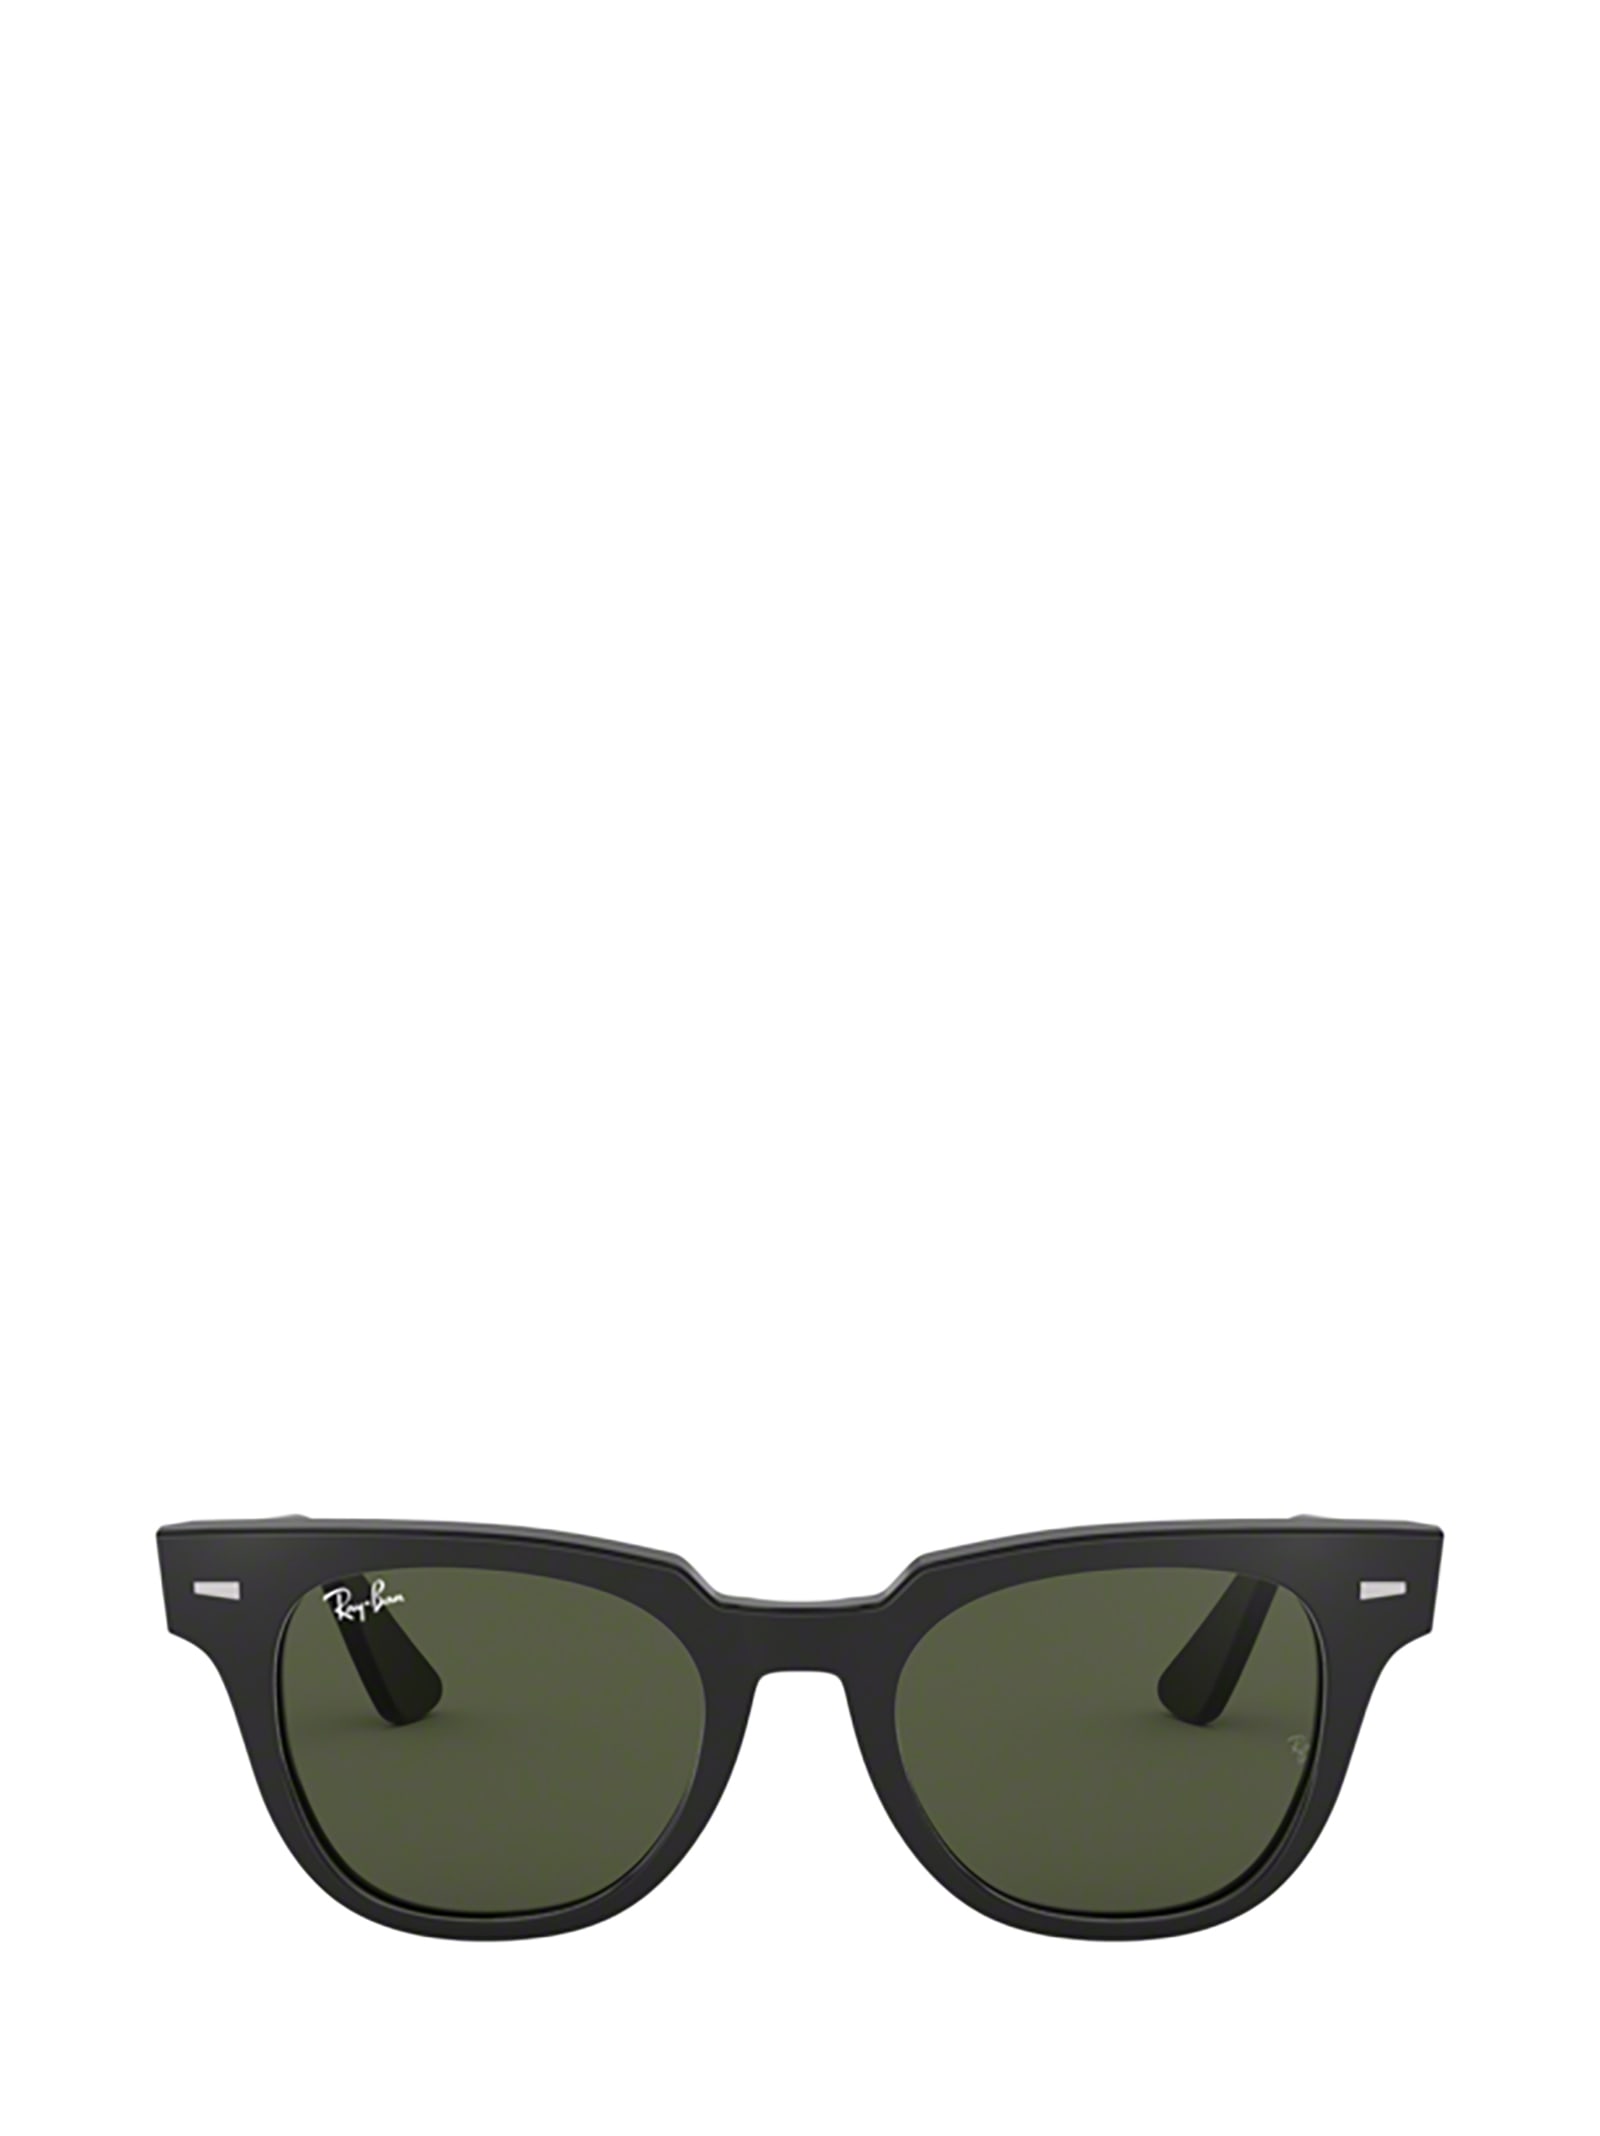 Ray Ban Rb2168 Black Sunglasses